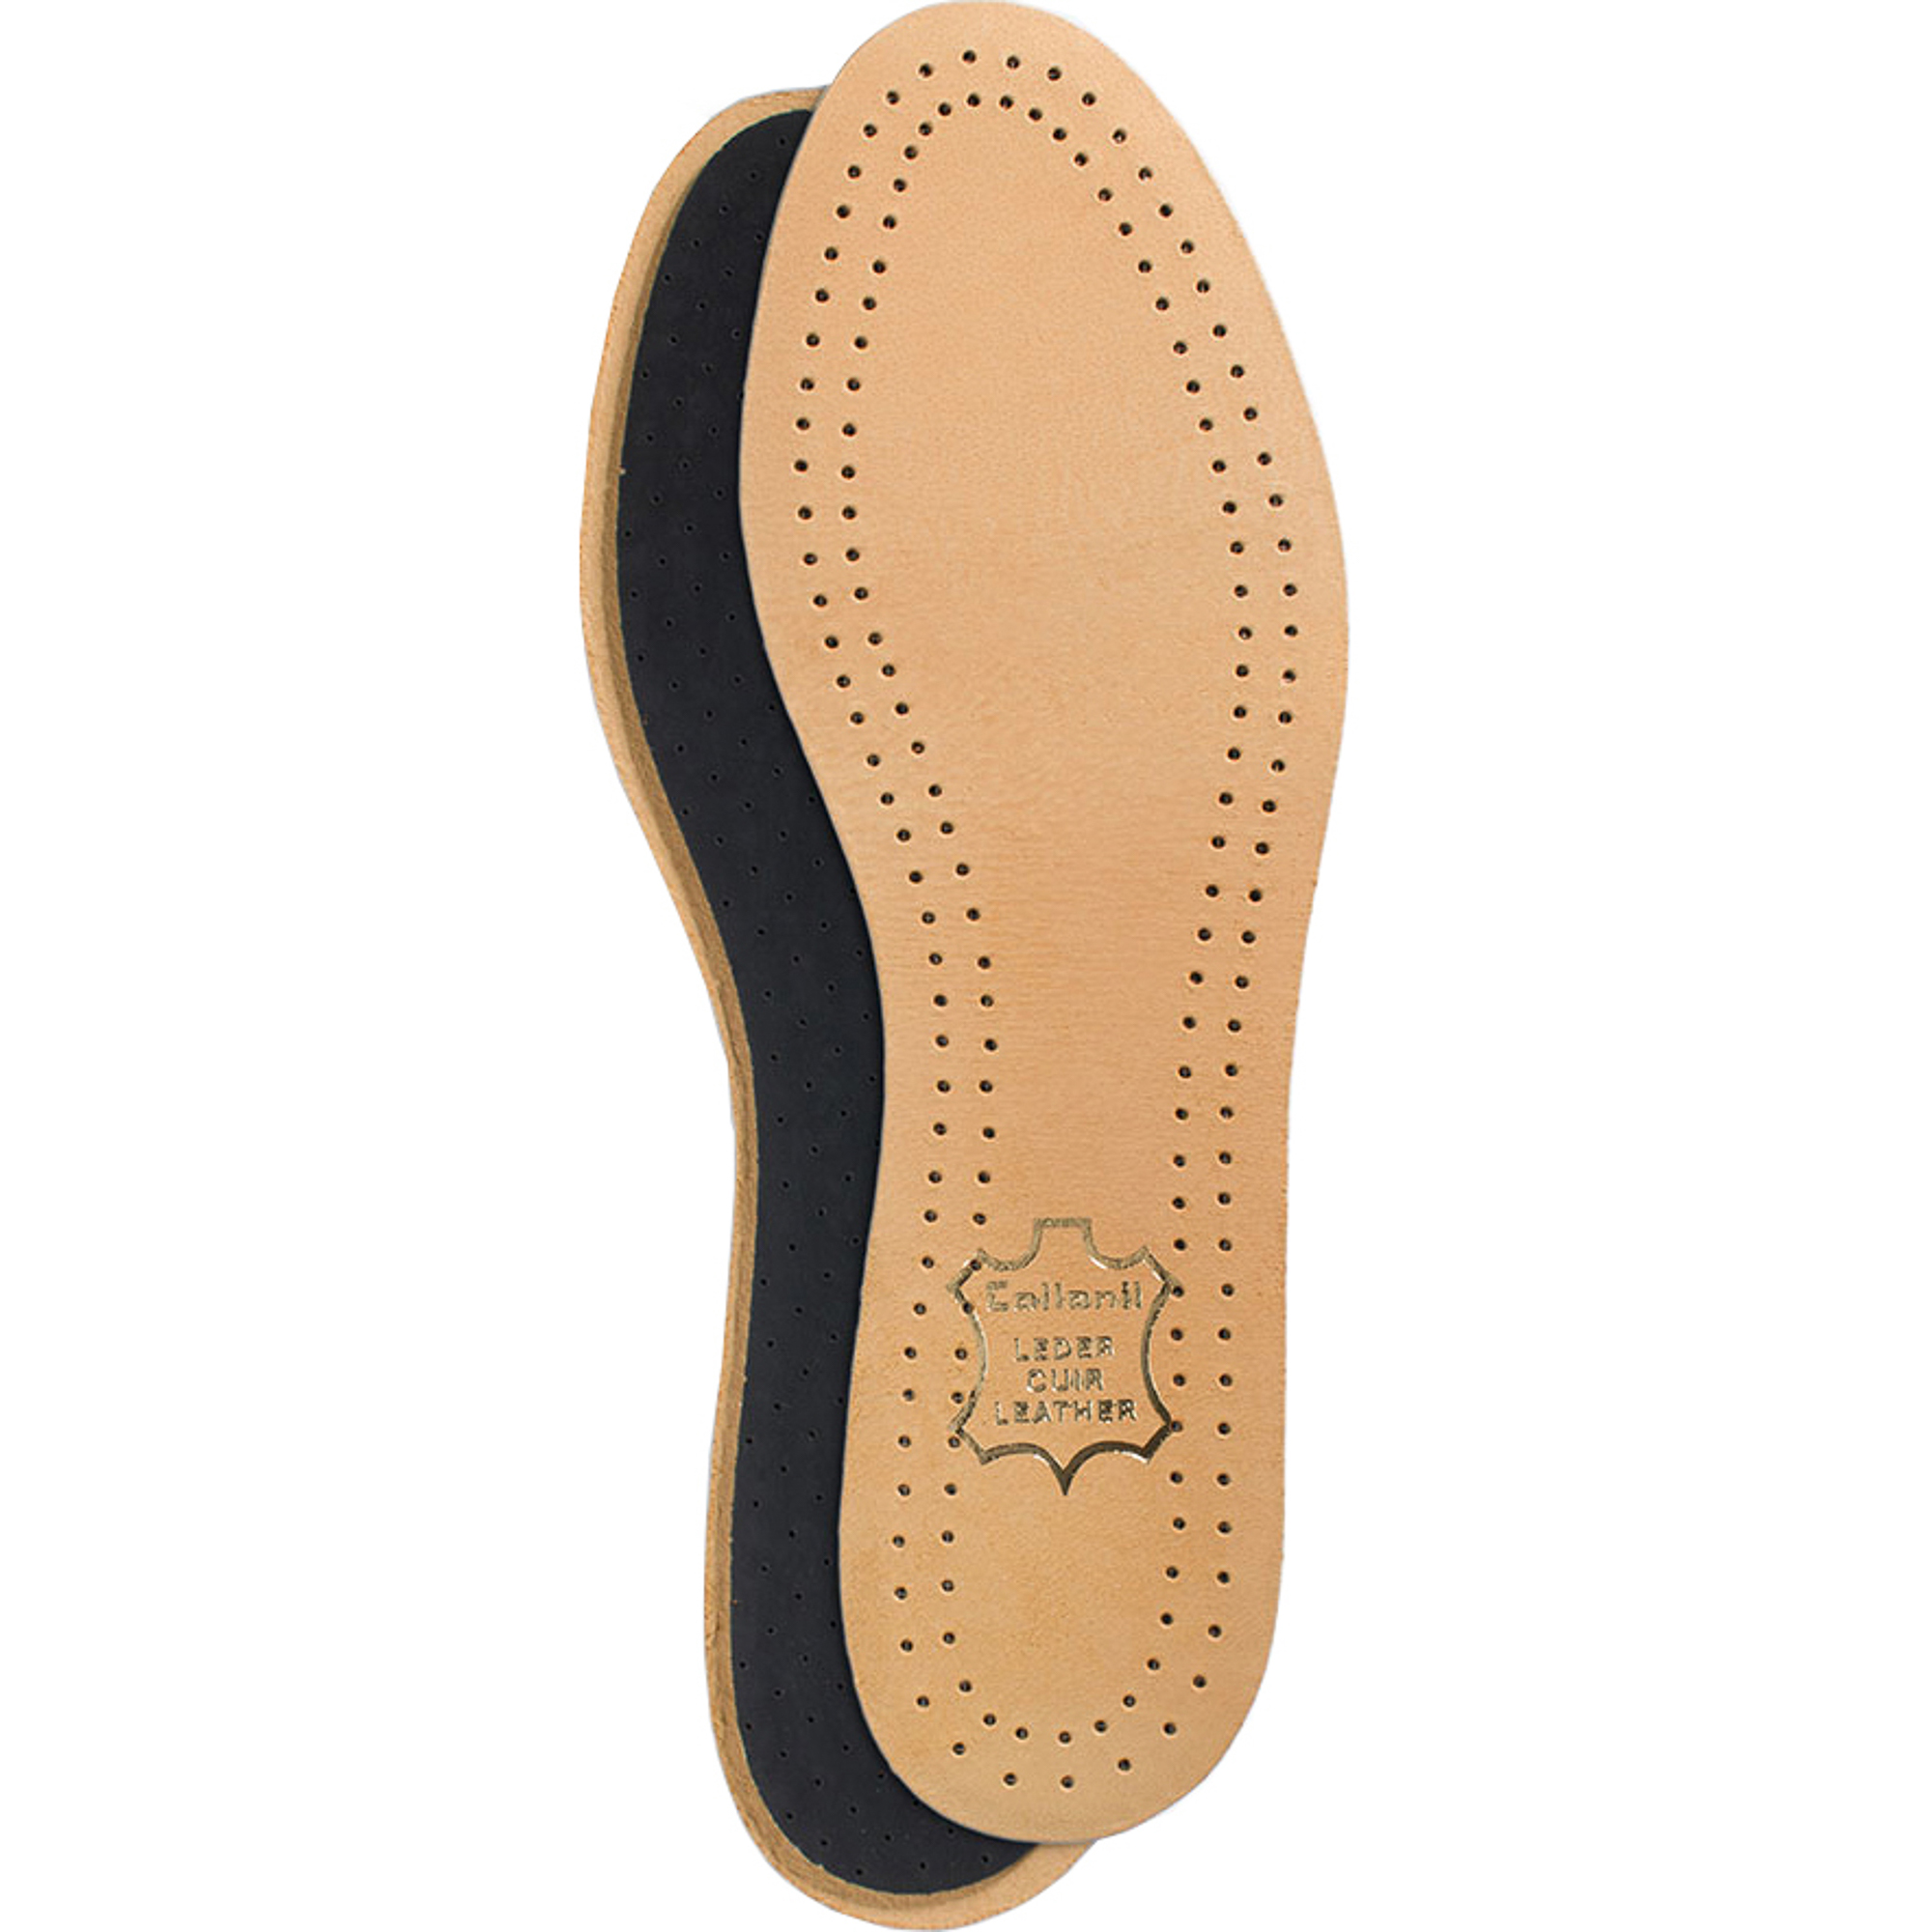 Стельки для обуви Collonil Luxor размер 43 спрей collonil carbon pro 400 мл